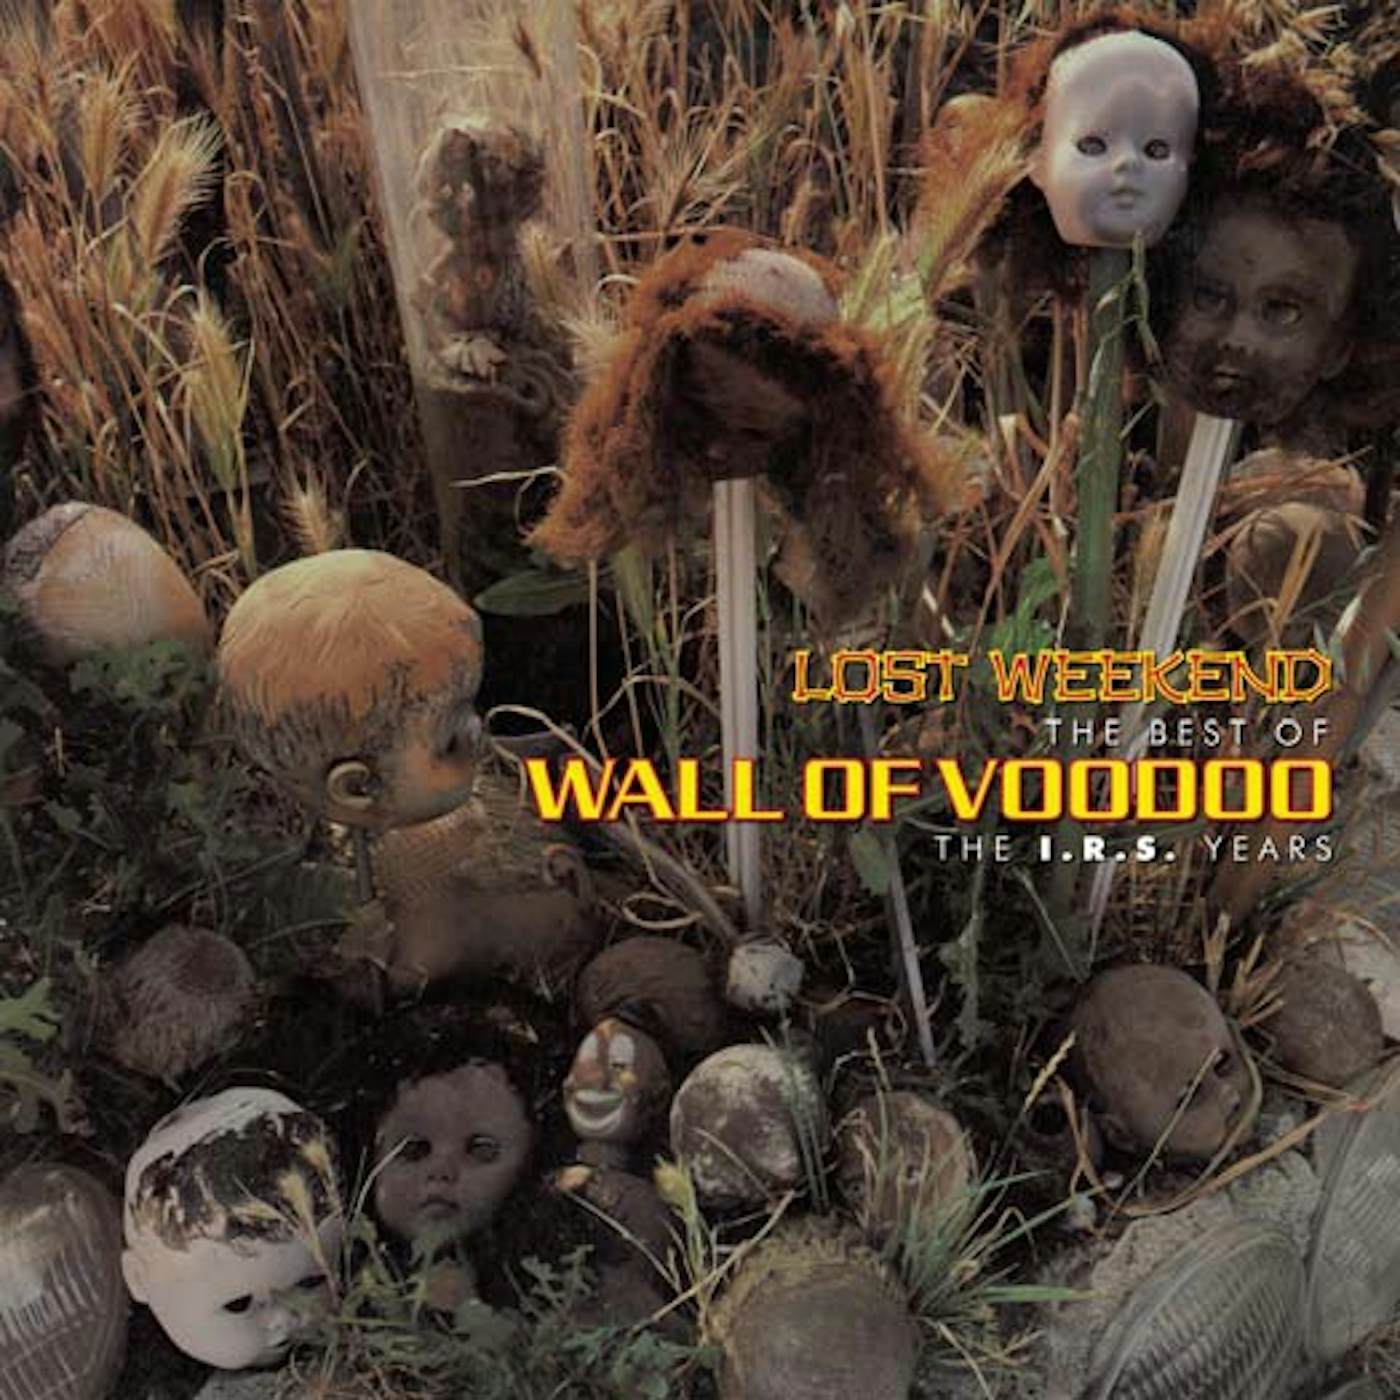 LOST WEEKEND: THE BEST OF WALL OF VOODOO IRS YEARS CD